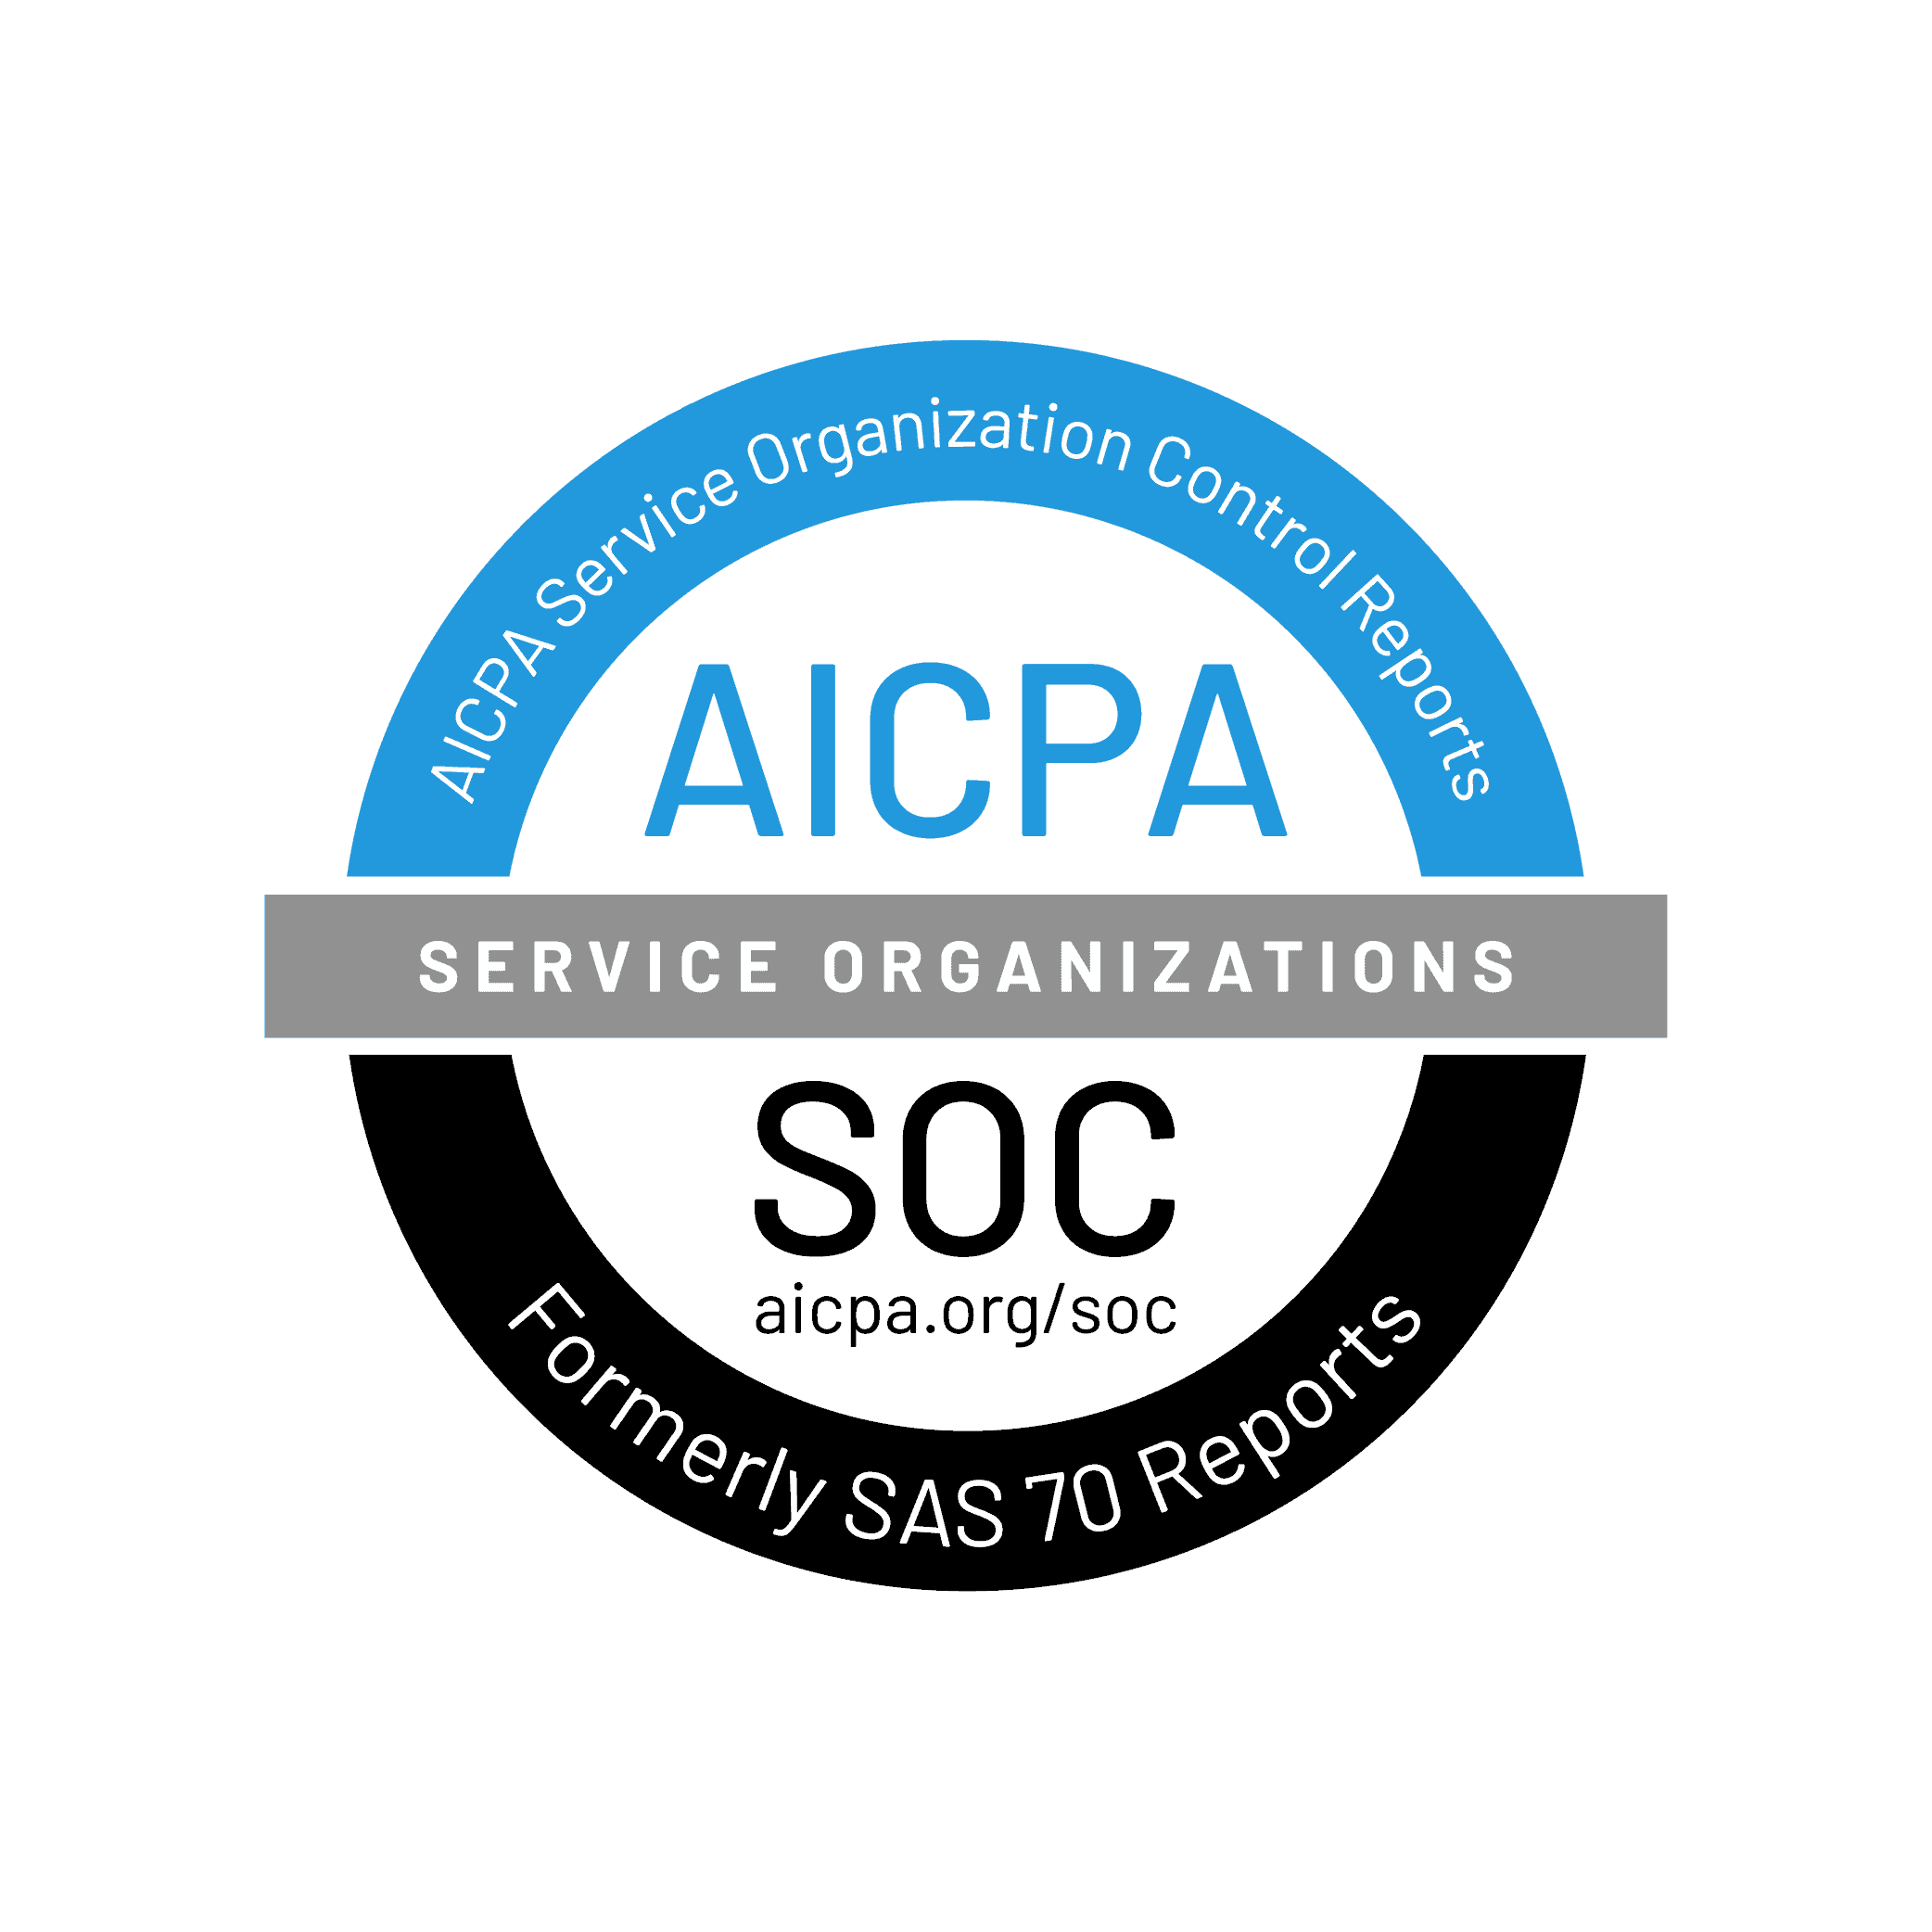 SOC2 Compliance Badge